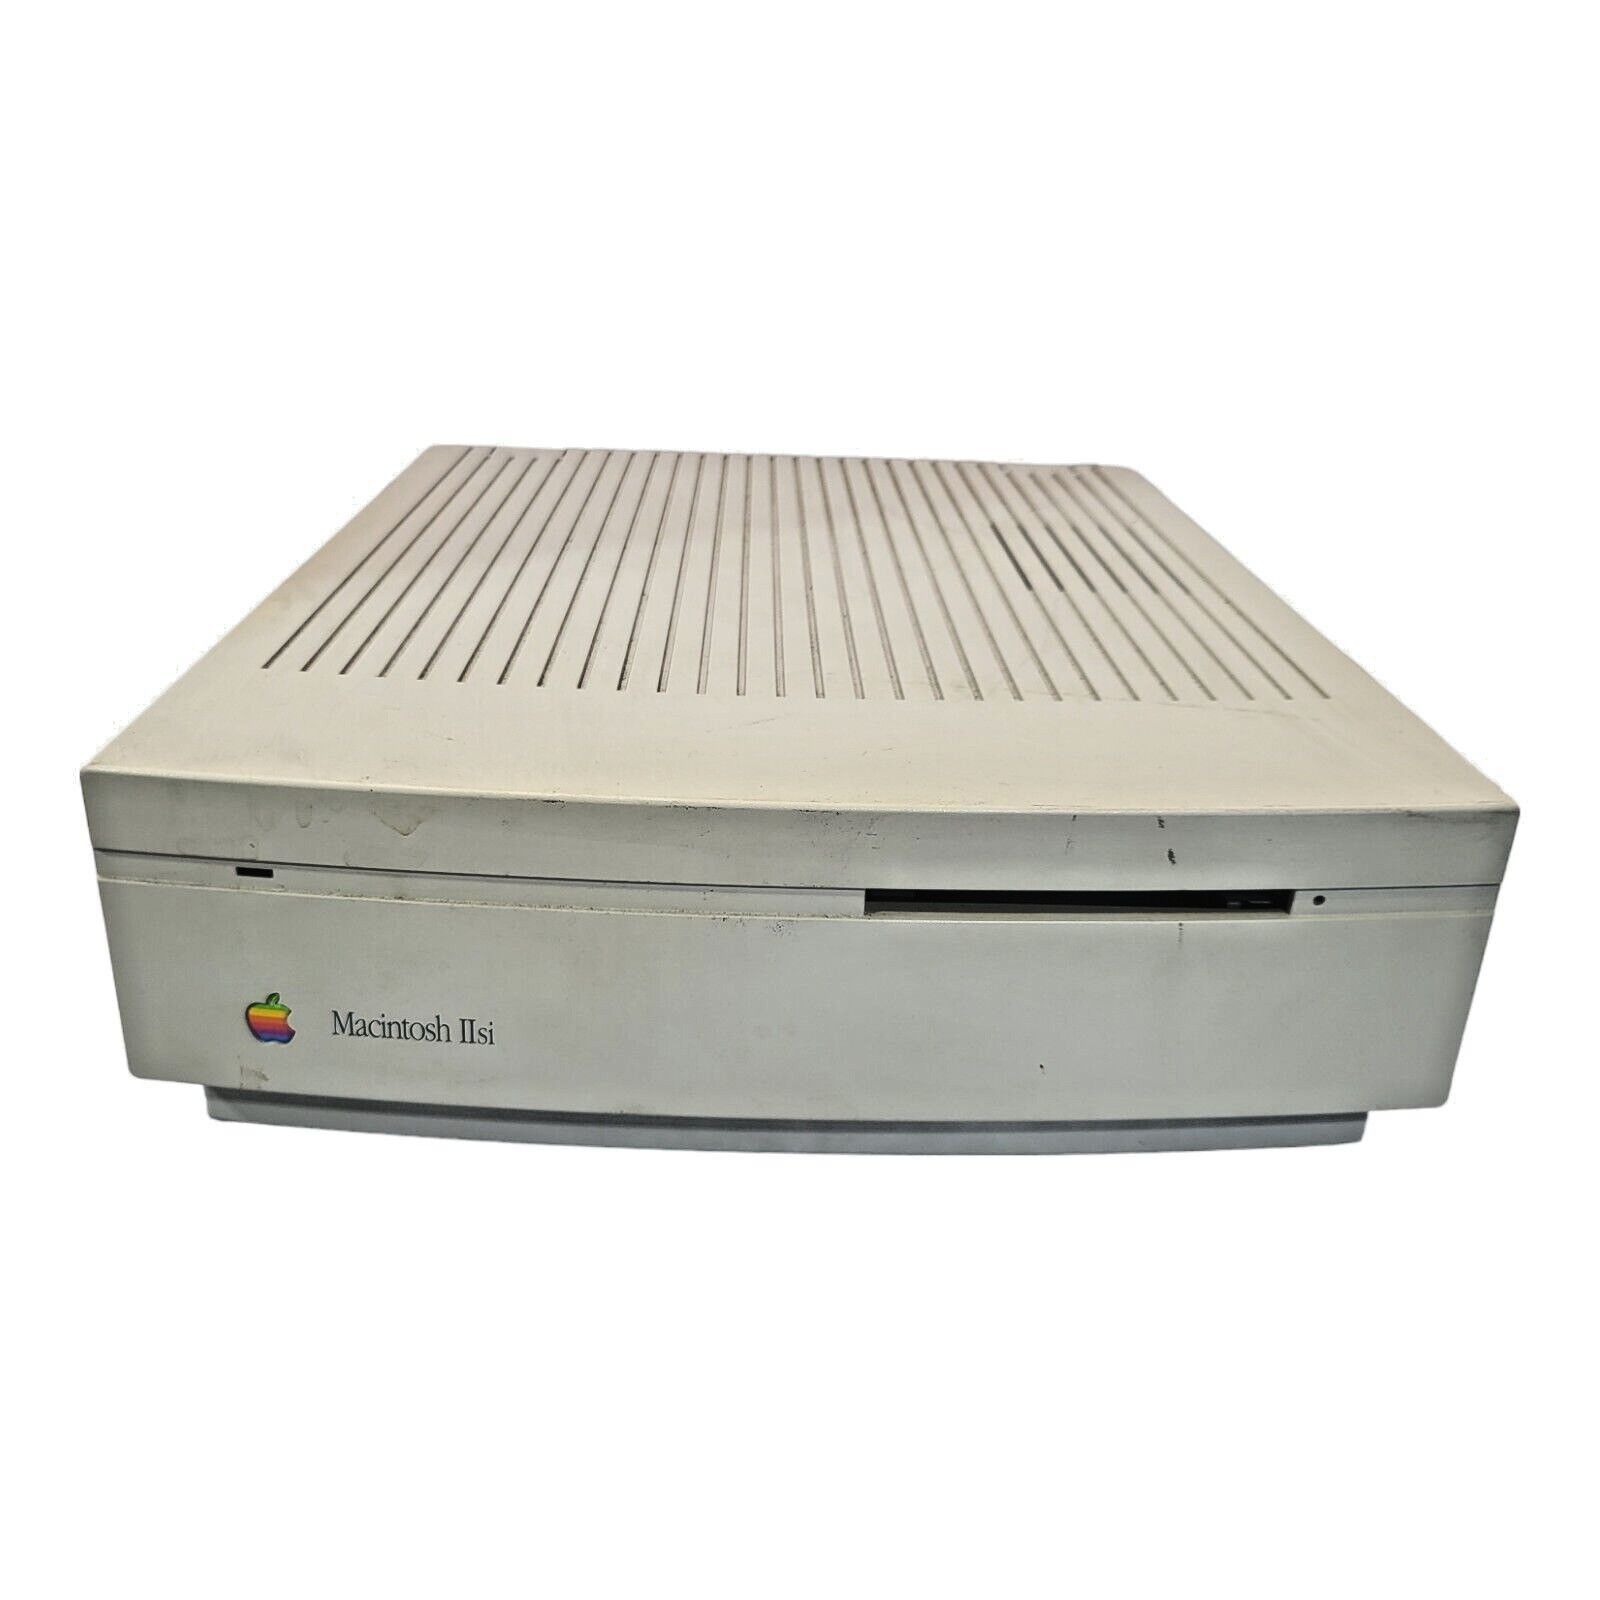 Rare Vintage Apple Macintosh IIsi M0360 1MB Retro Desktop Computer PC - UNTESTED